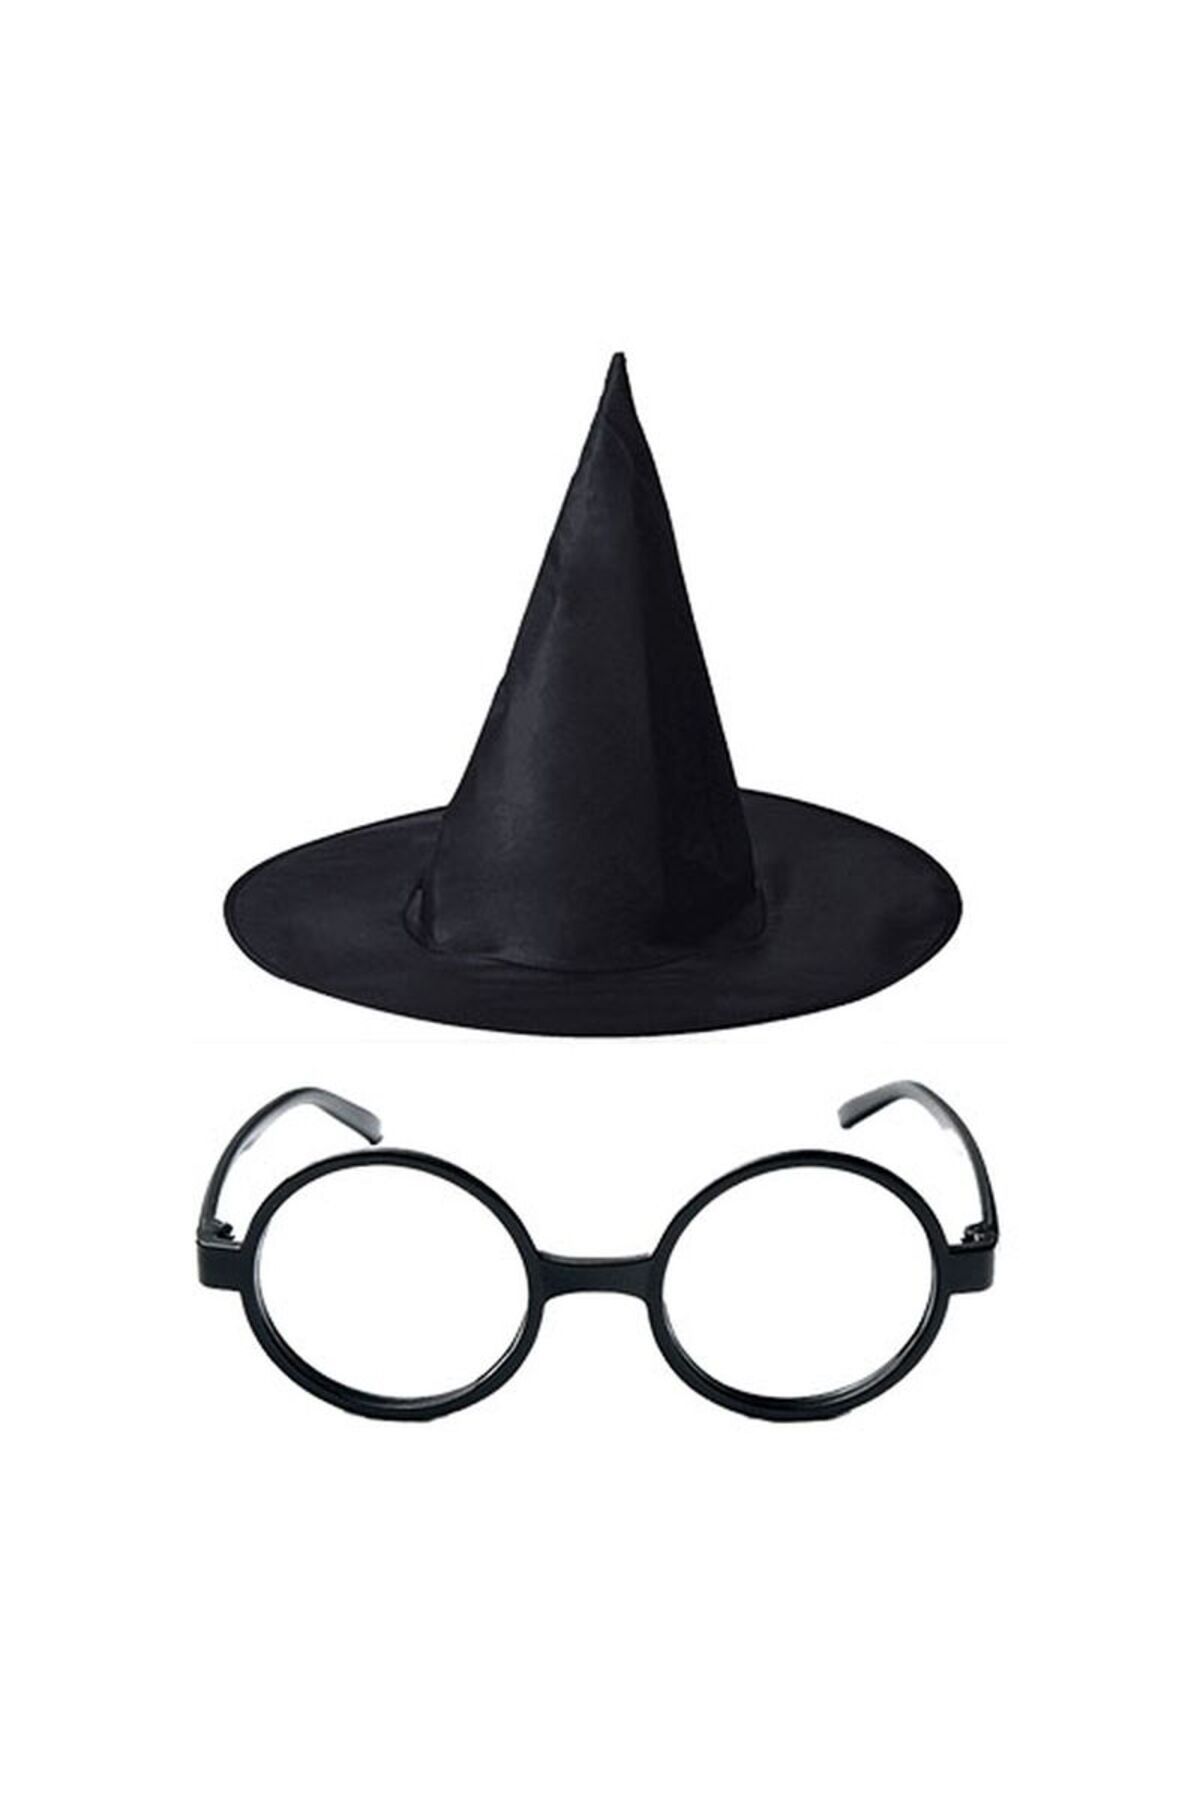 Rose La Belles Harry Potter Büyücü Şapkası ve Harry Potter Büyücü Gözlüğü Siyah Renk